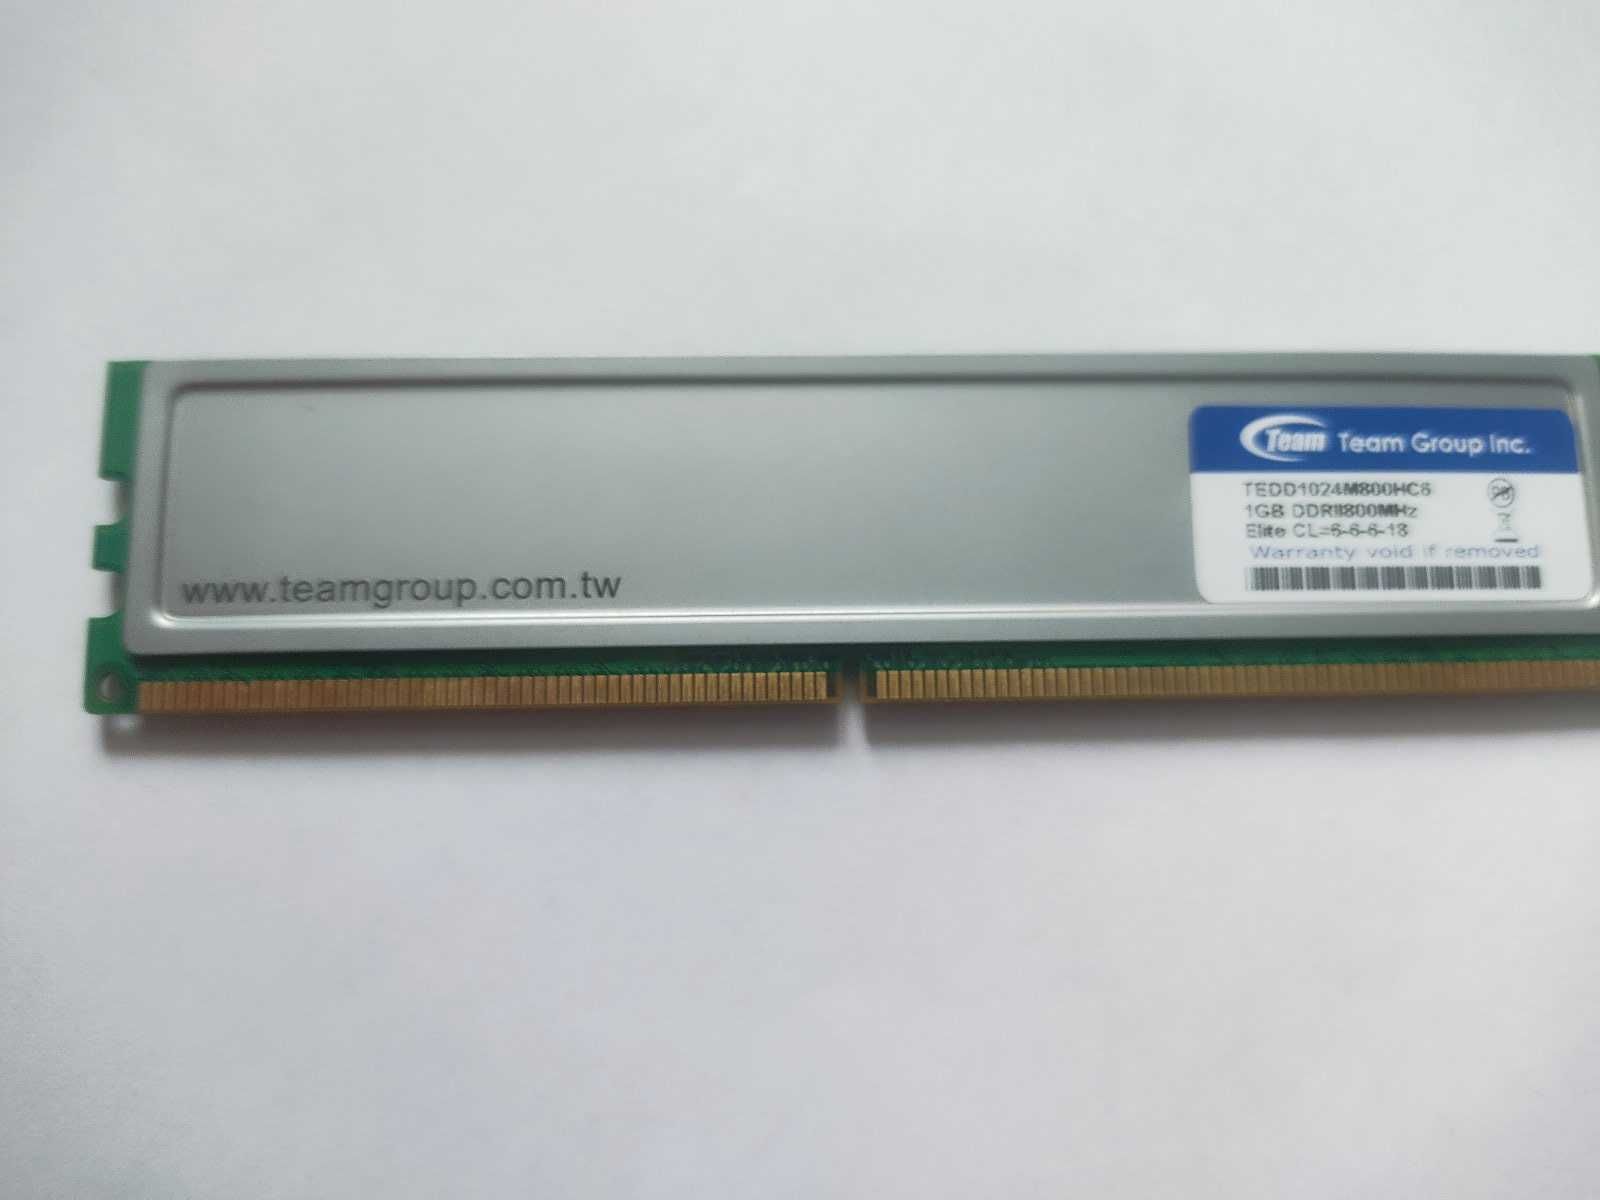 Планка памяти DDR2  1GB.